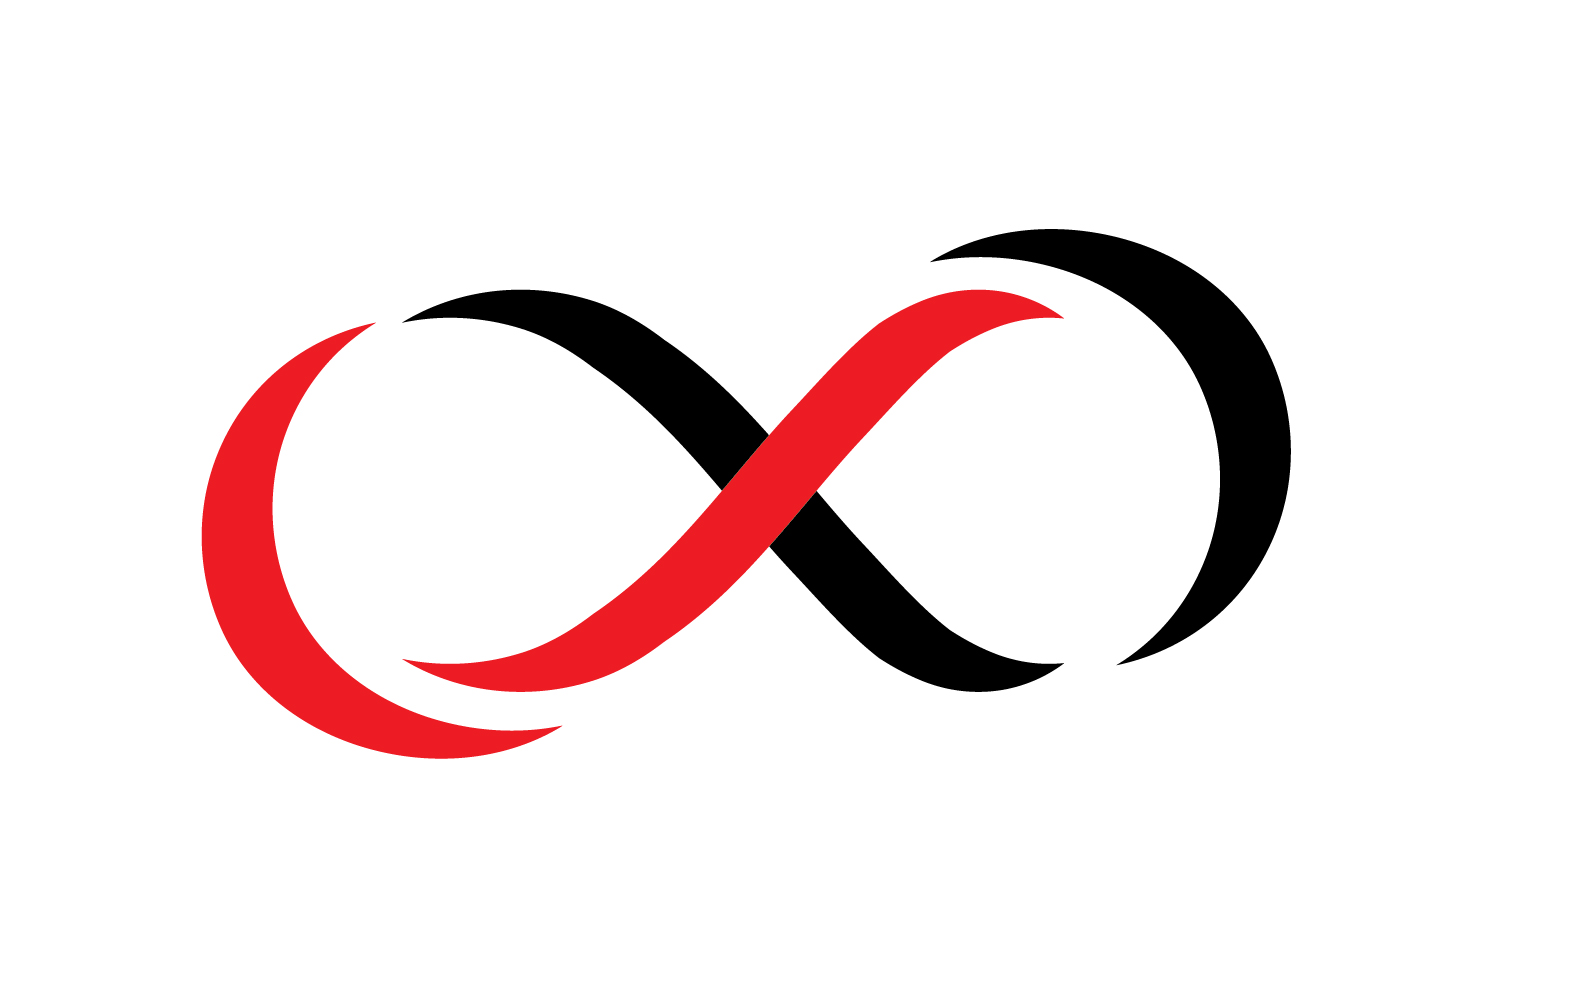 Infinity loop line logo and symbol vector v12